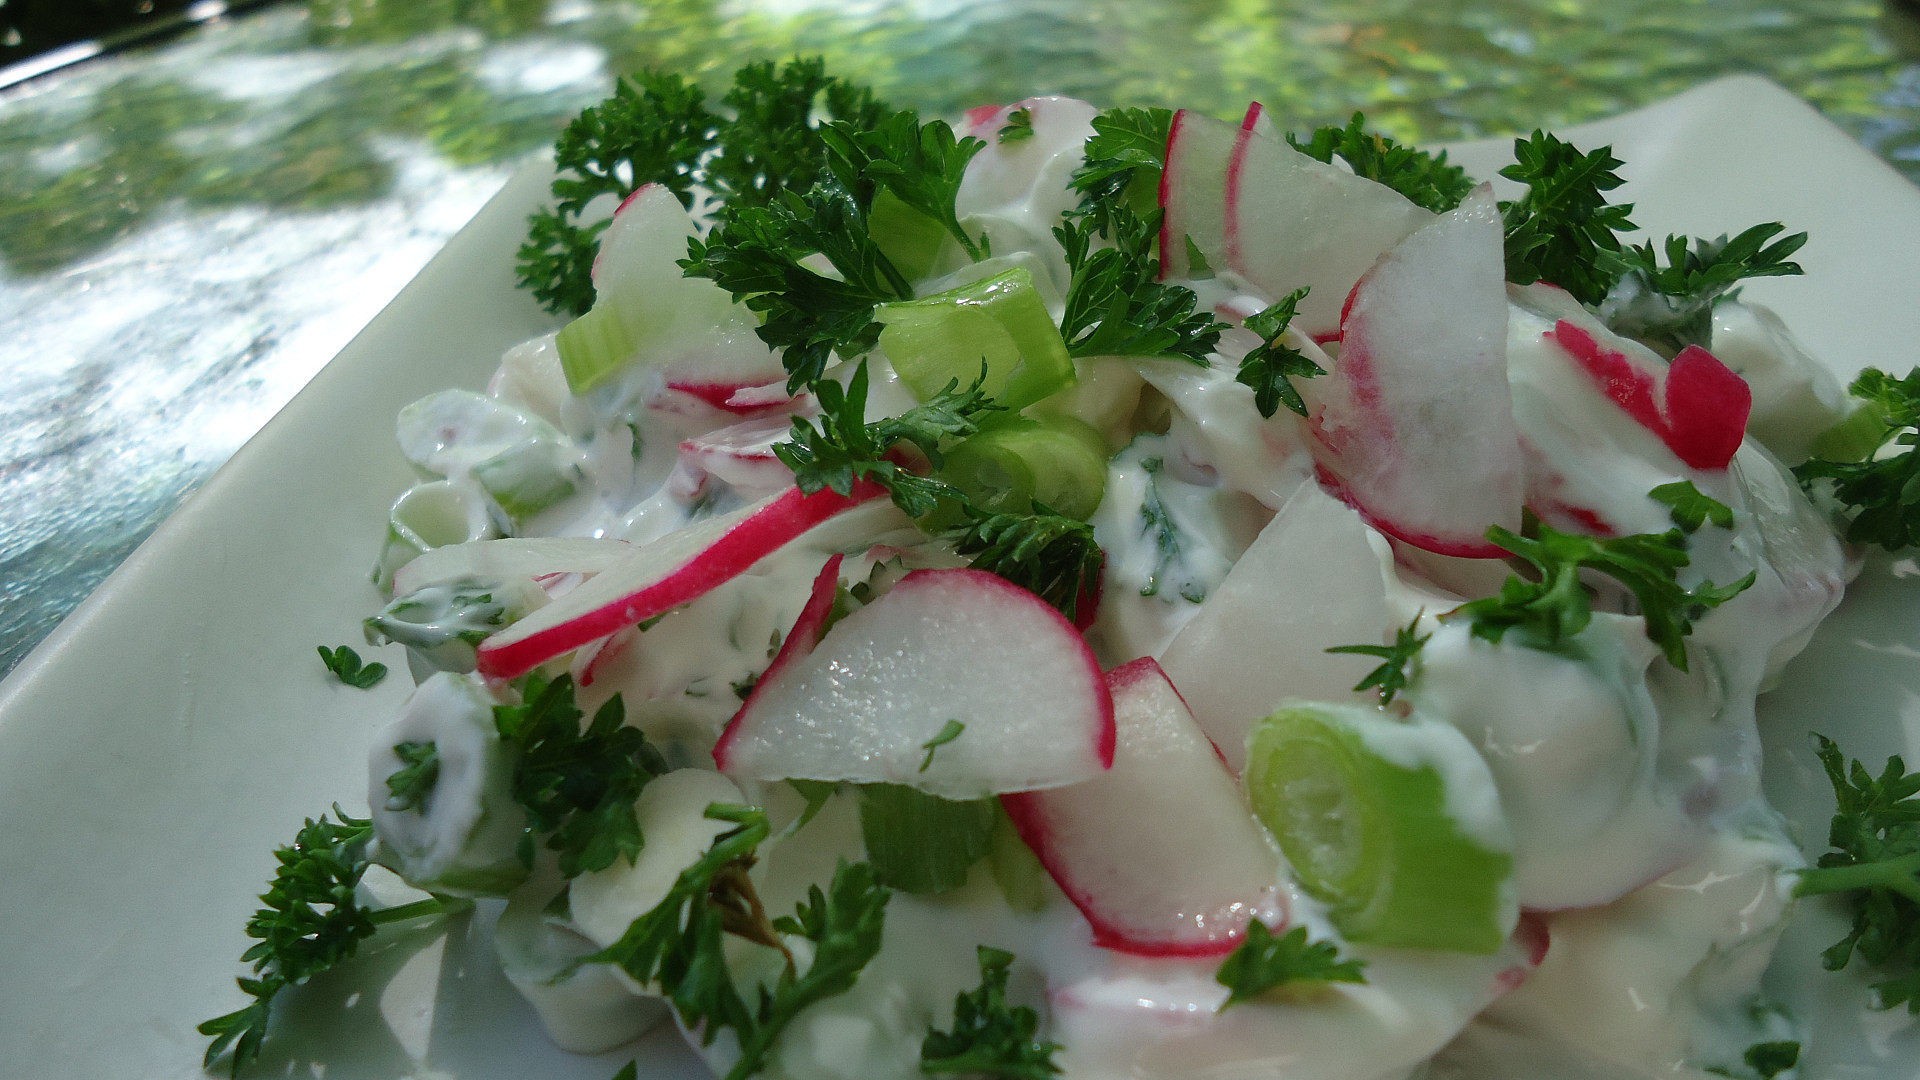 Satrica - tvarohový salát s jarní cibulkou